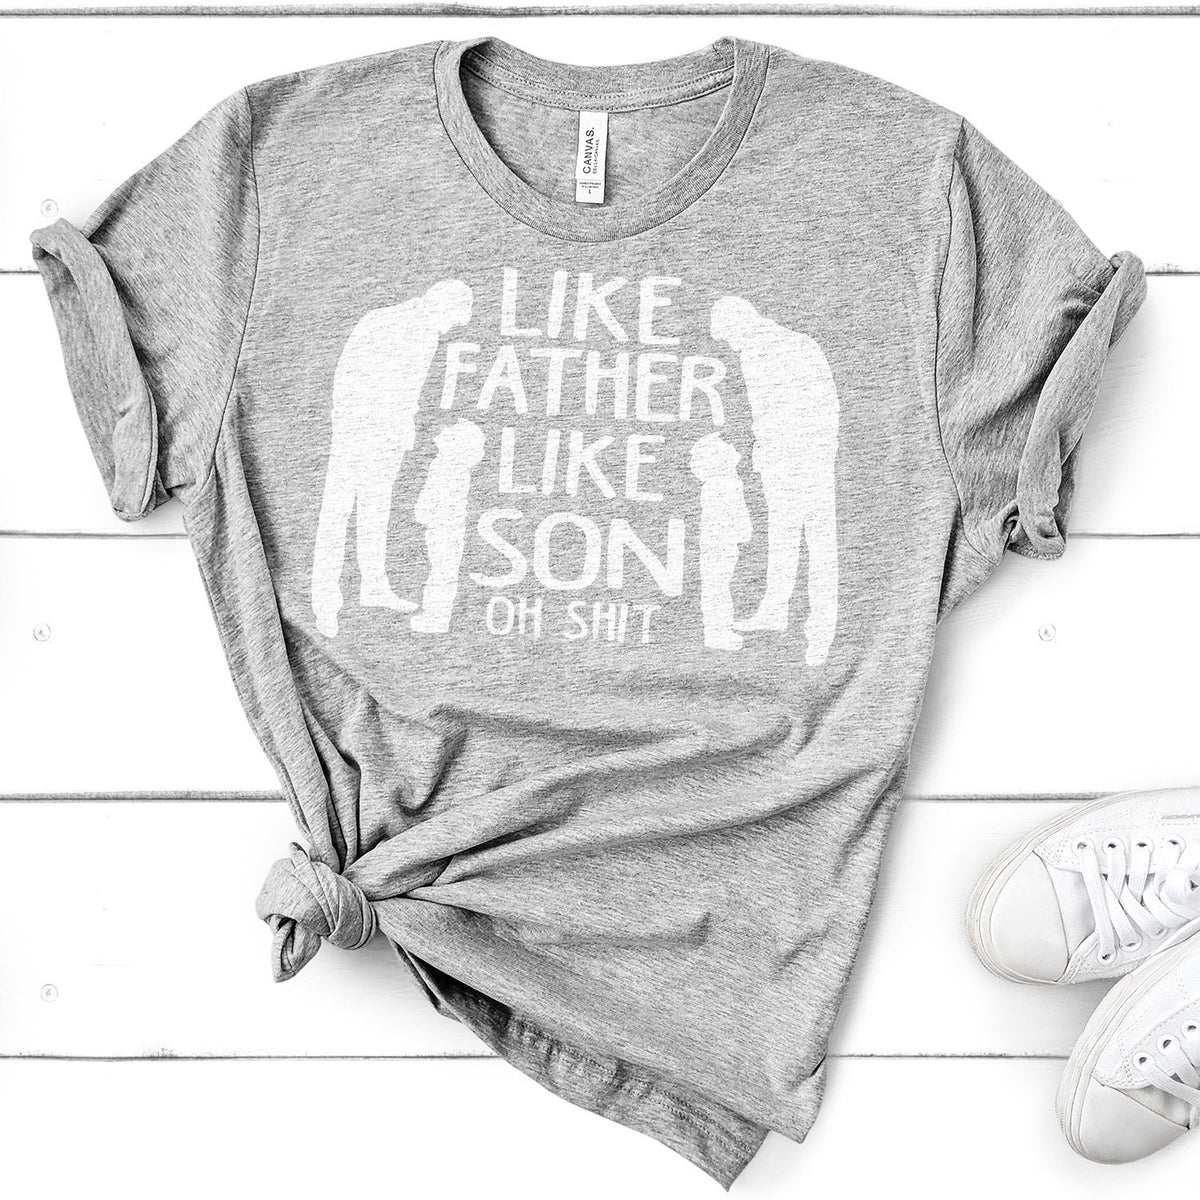 Like Father Like Son Oh Shit - Short Sleeve Tee Shirt